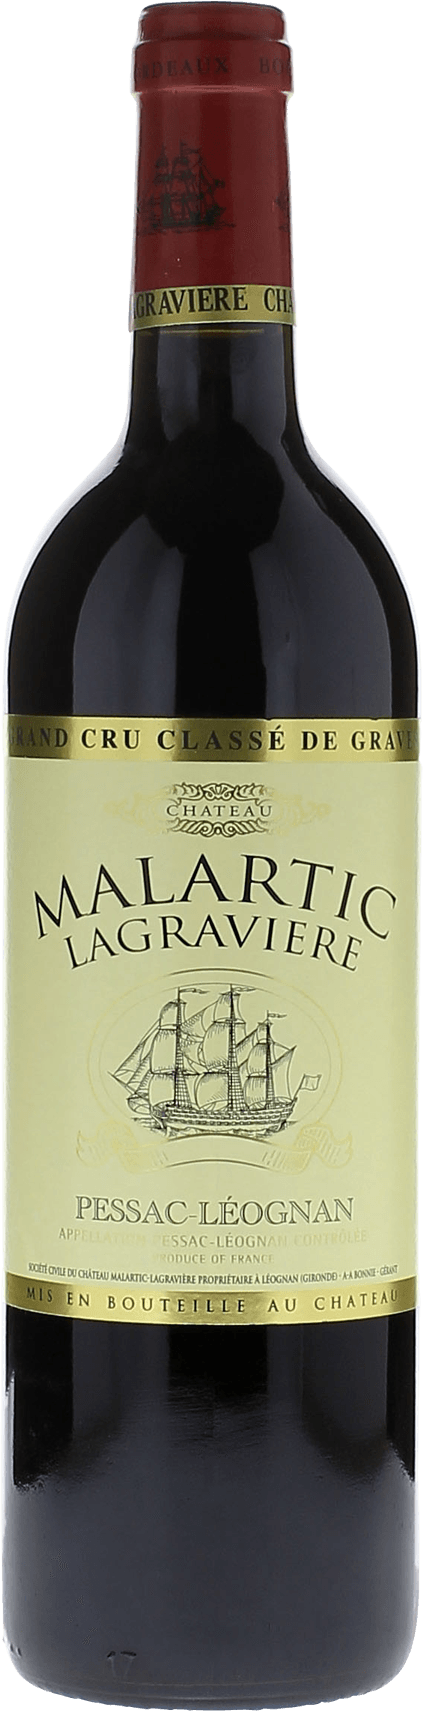 Malartic lagraviere rouge 2006 Grand Cru Class Graves, Bordeaux rouge